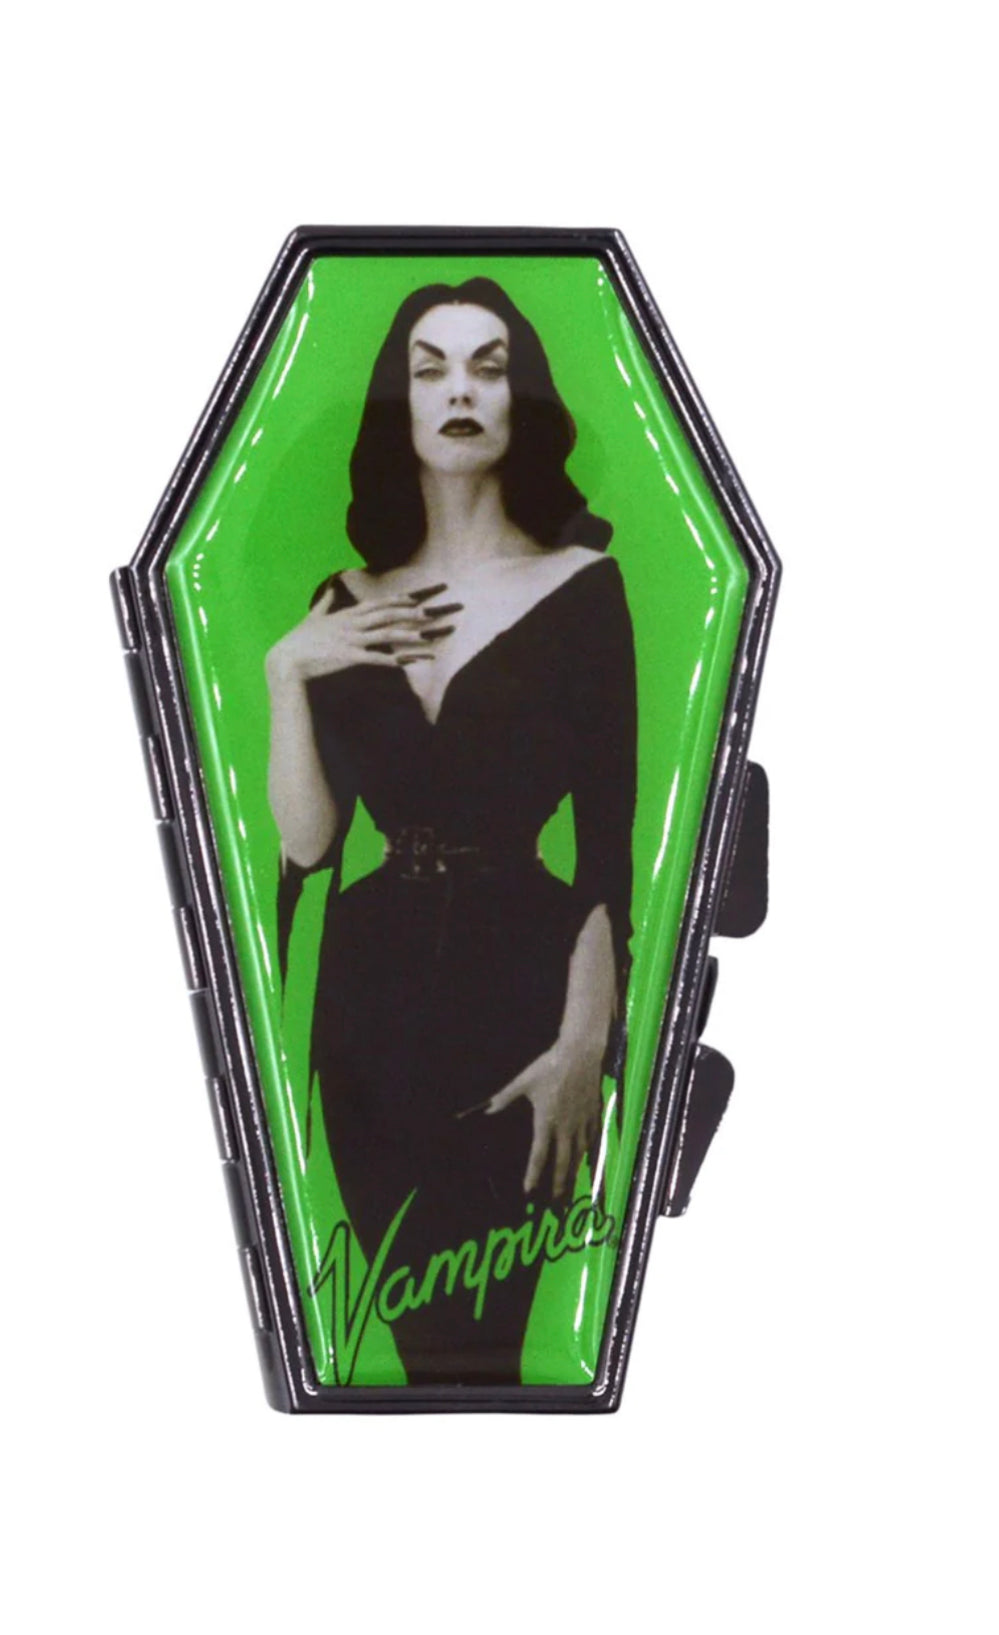 Vampira Portrait Green Coffin Compact